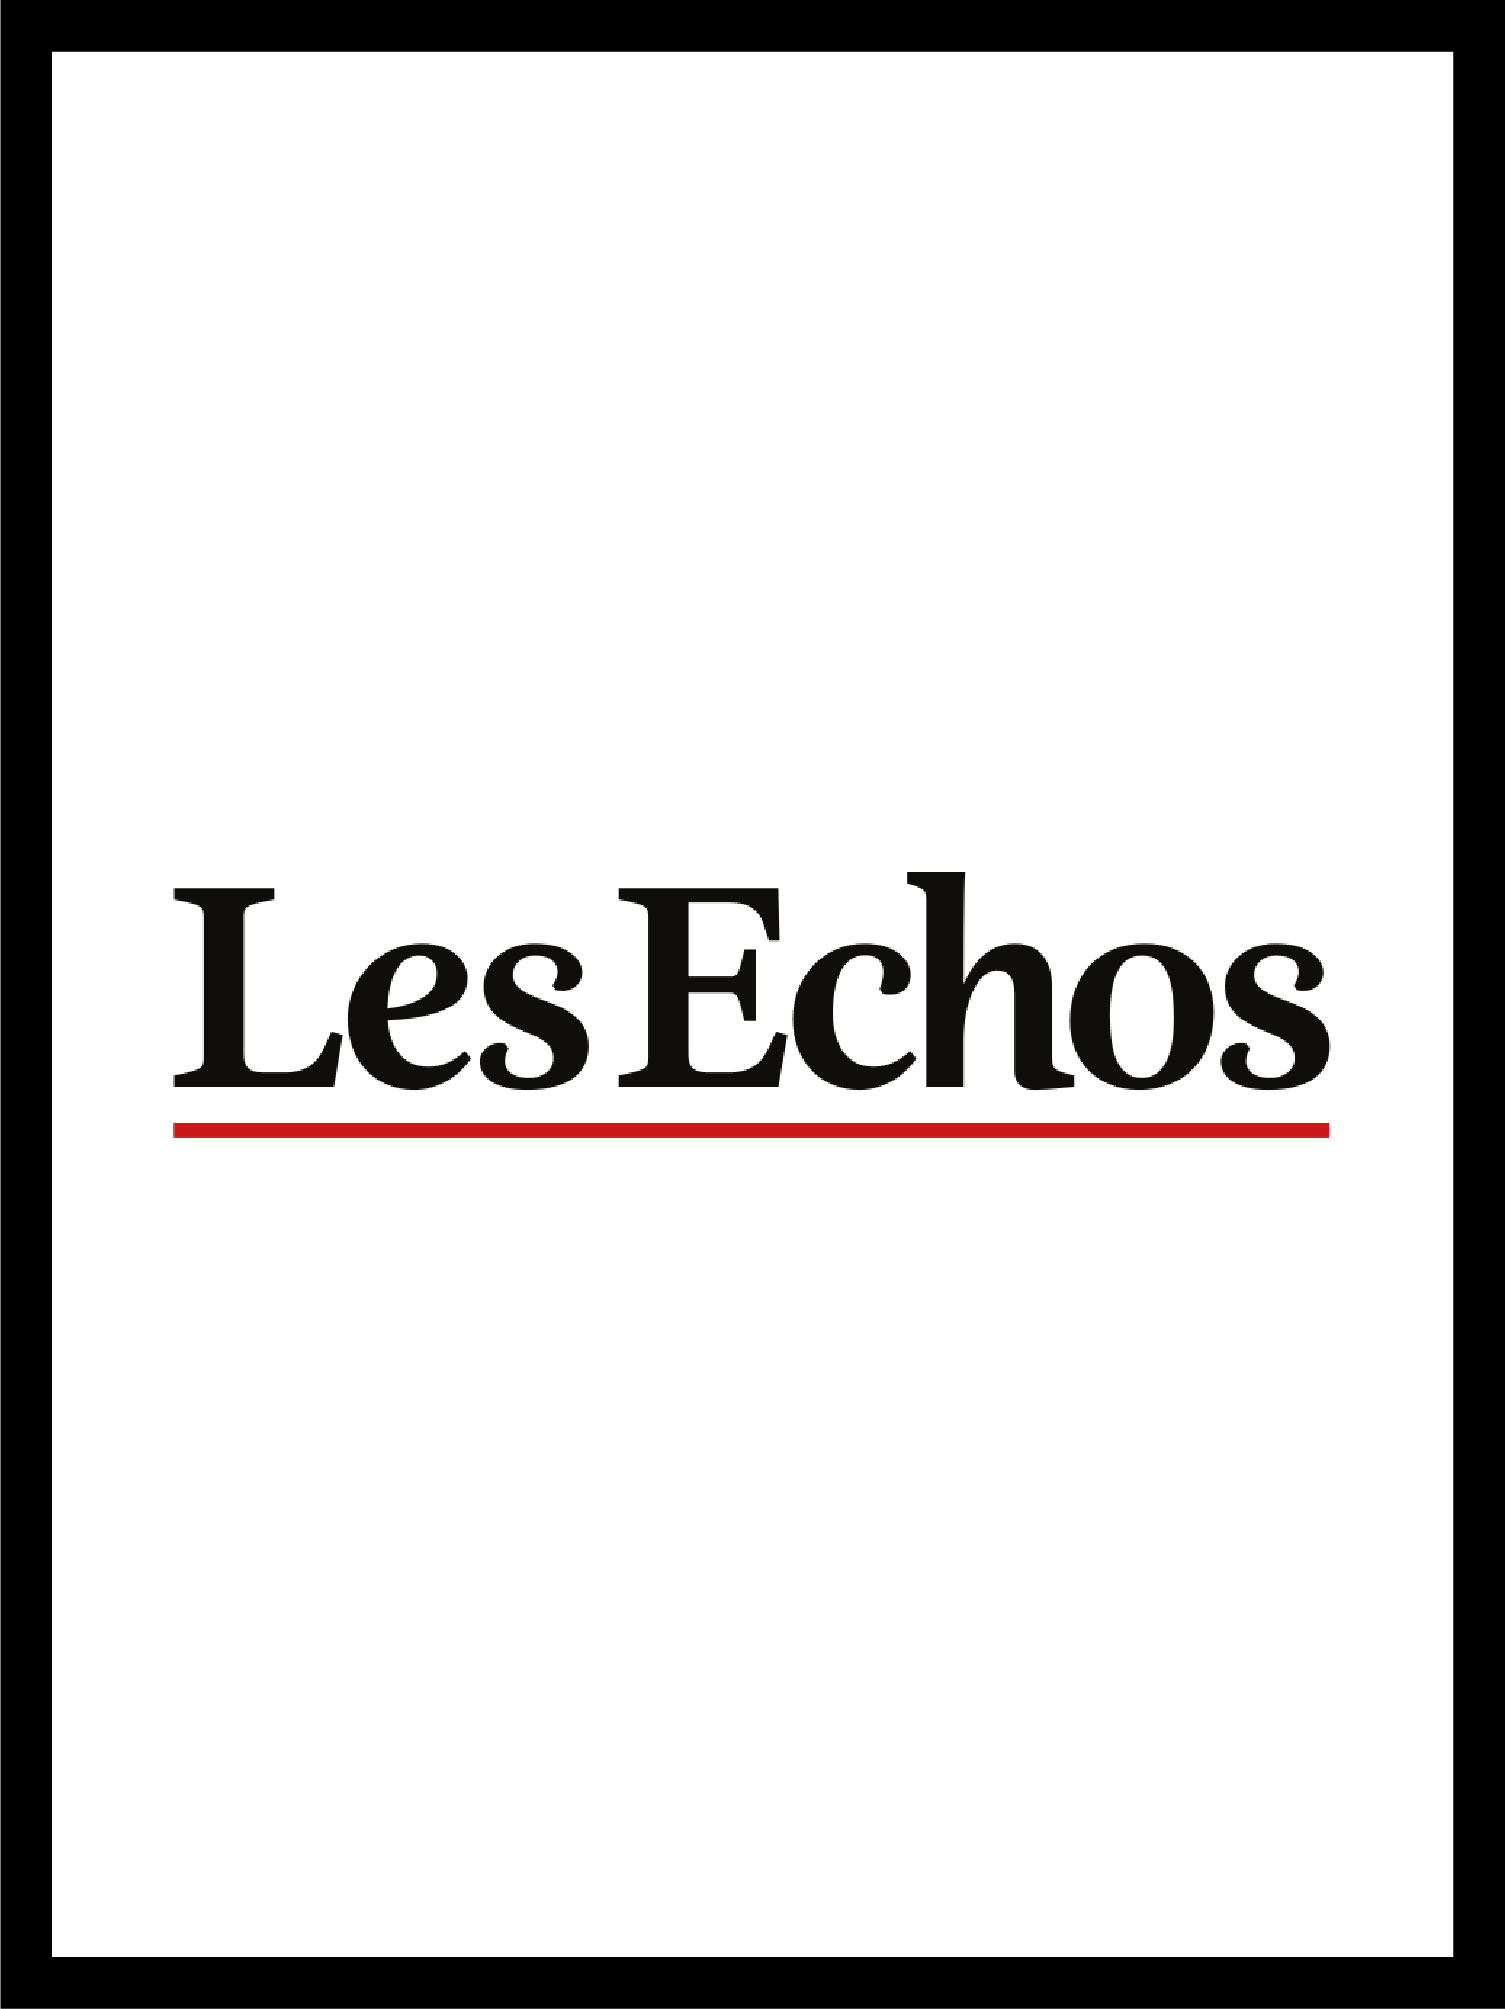 logo of the magazine les echos 2021